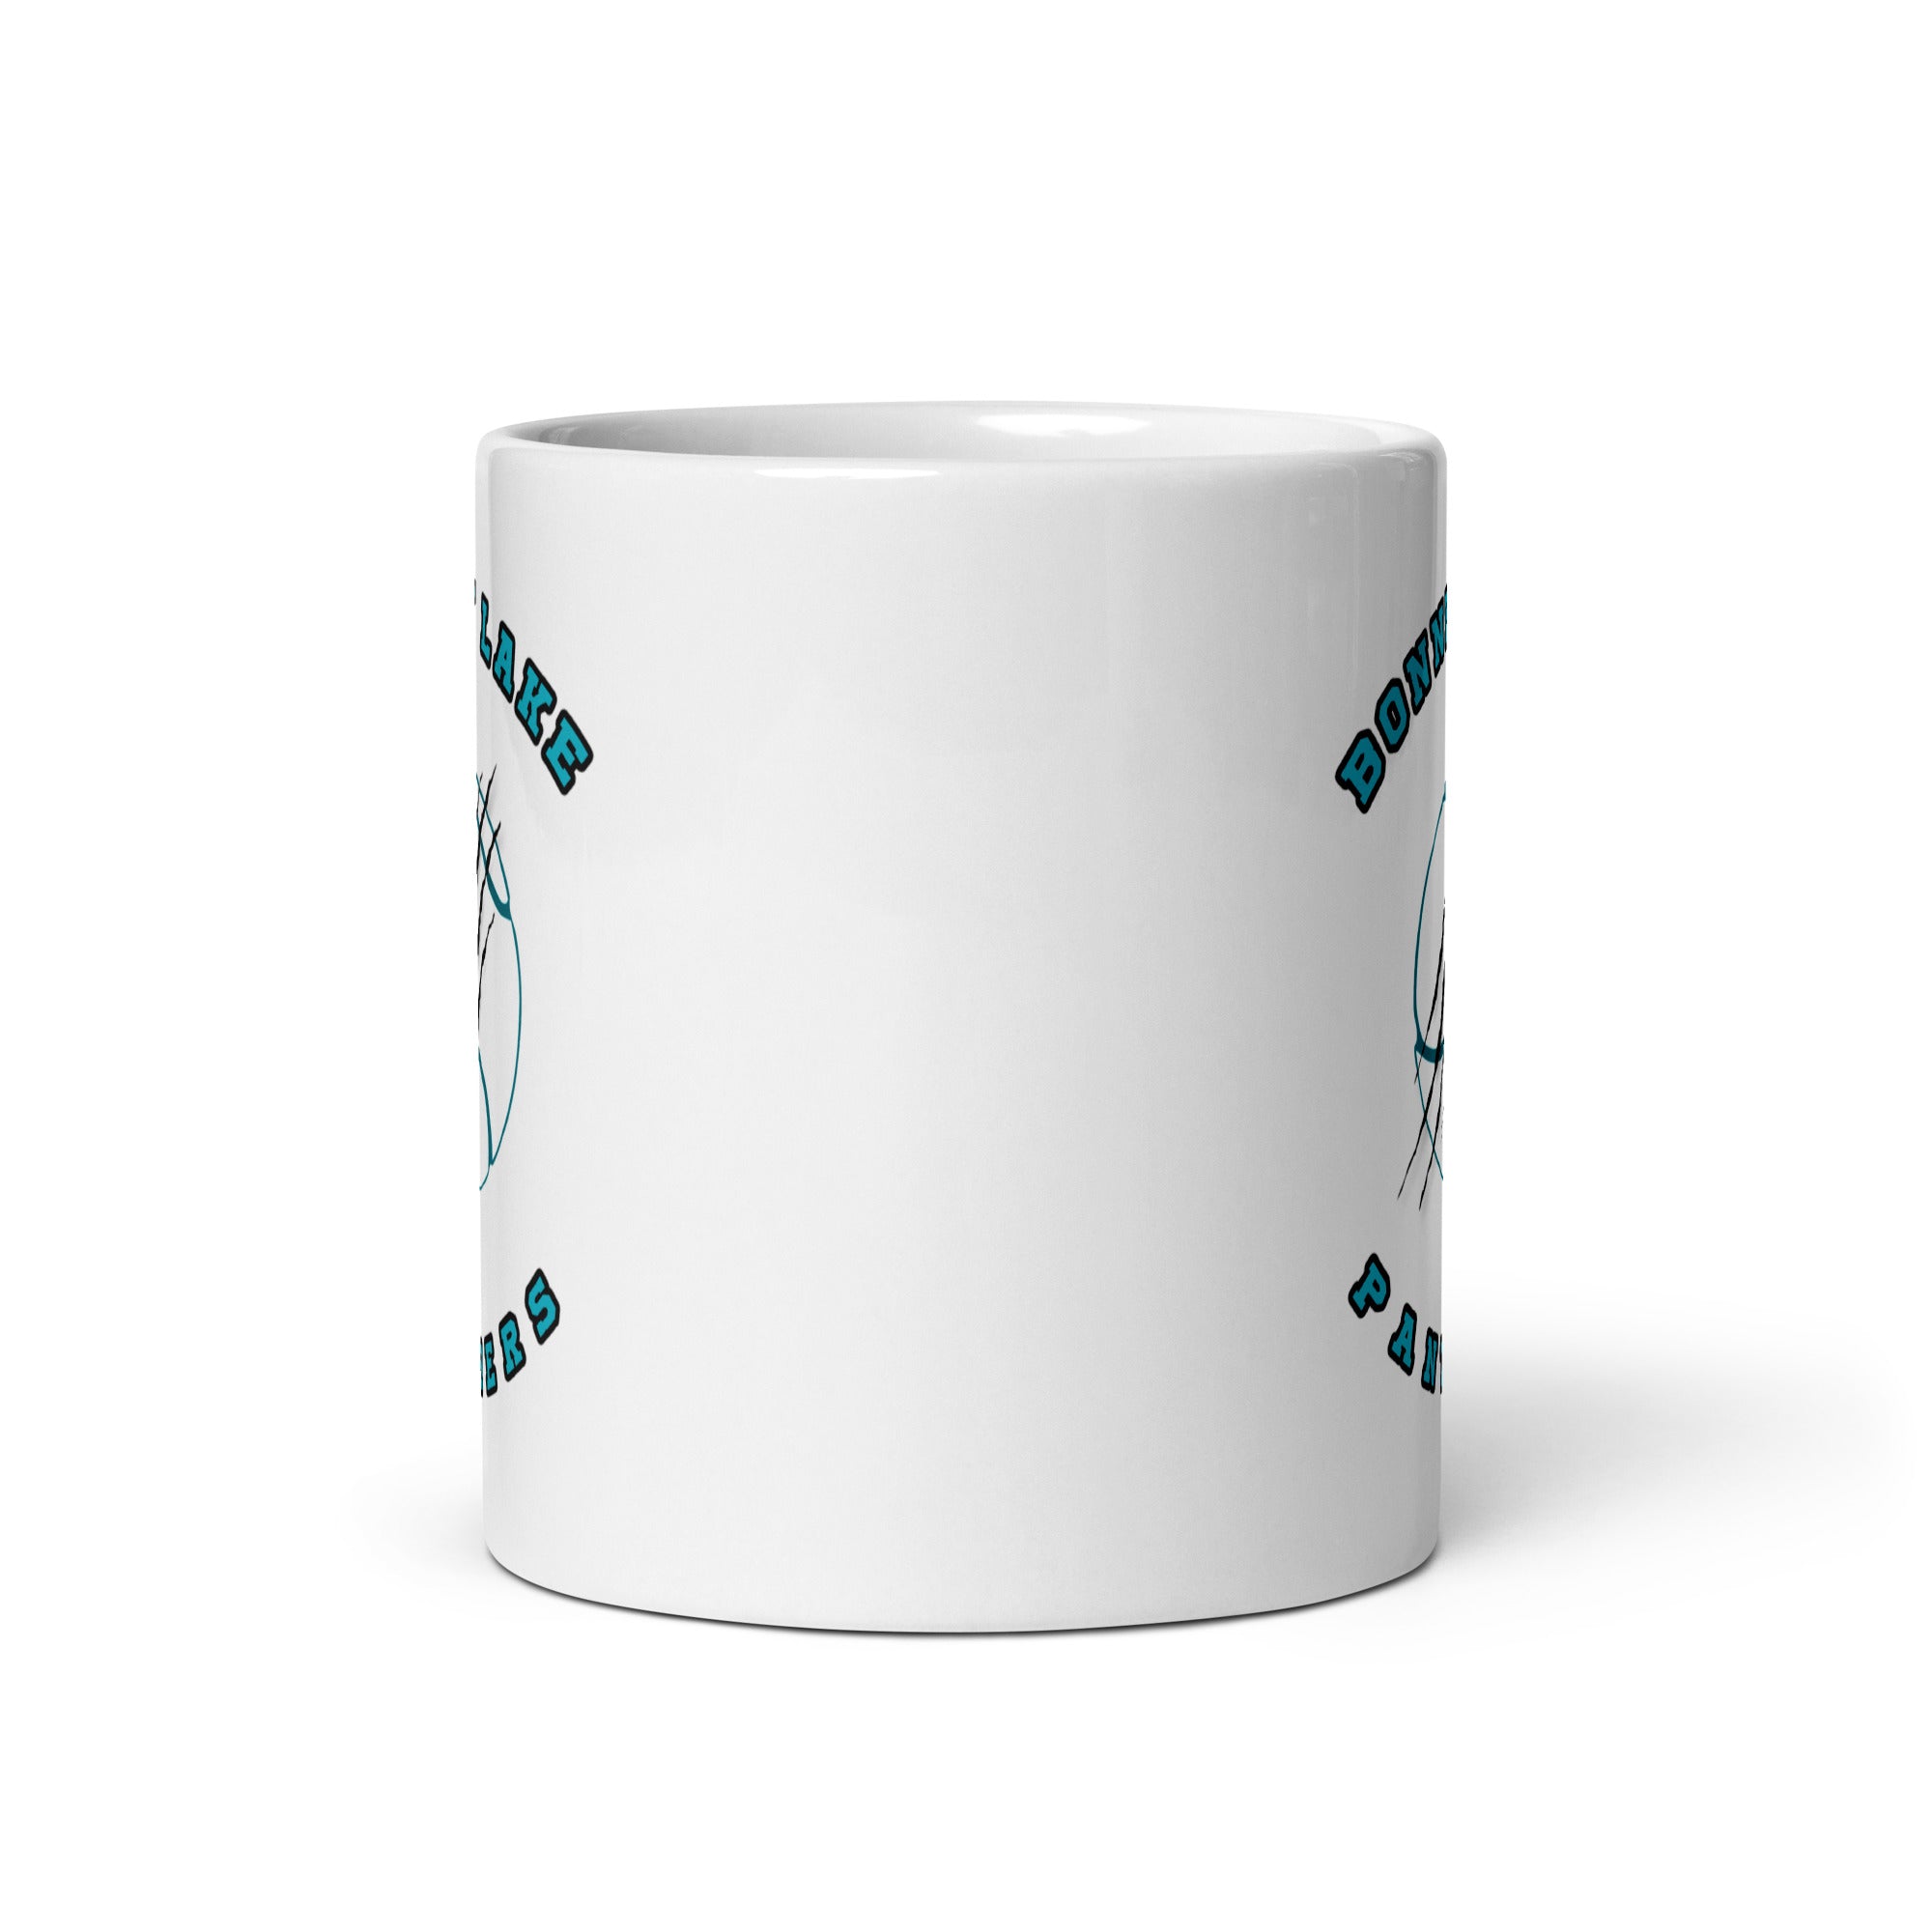 BLHT White glossy mug